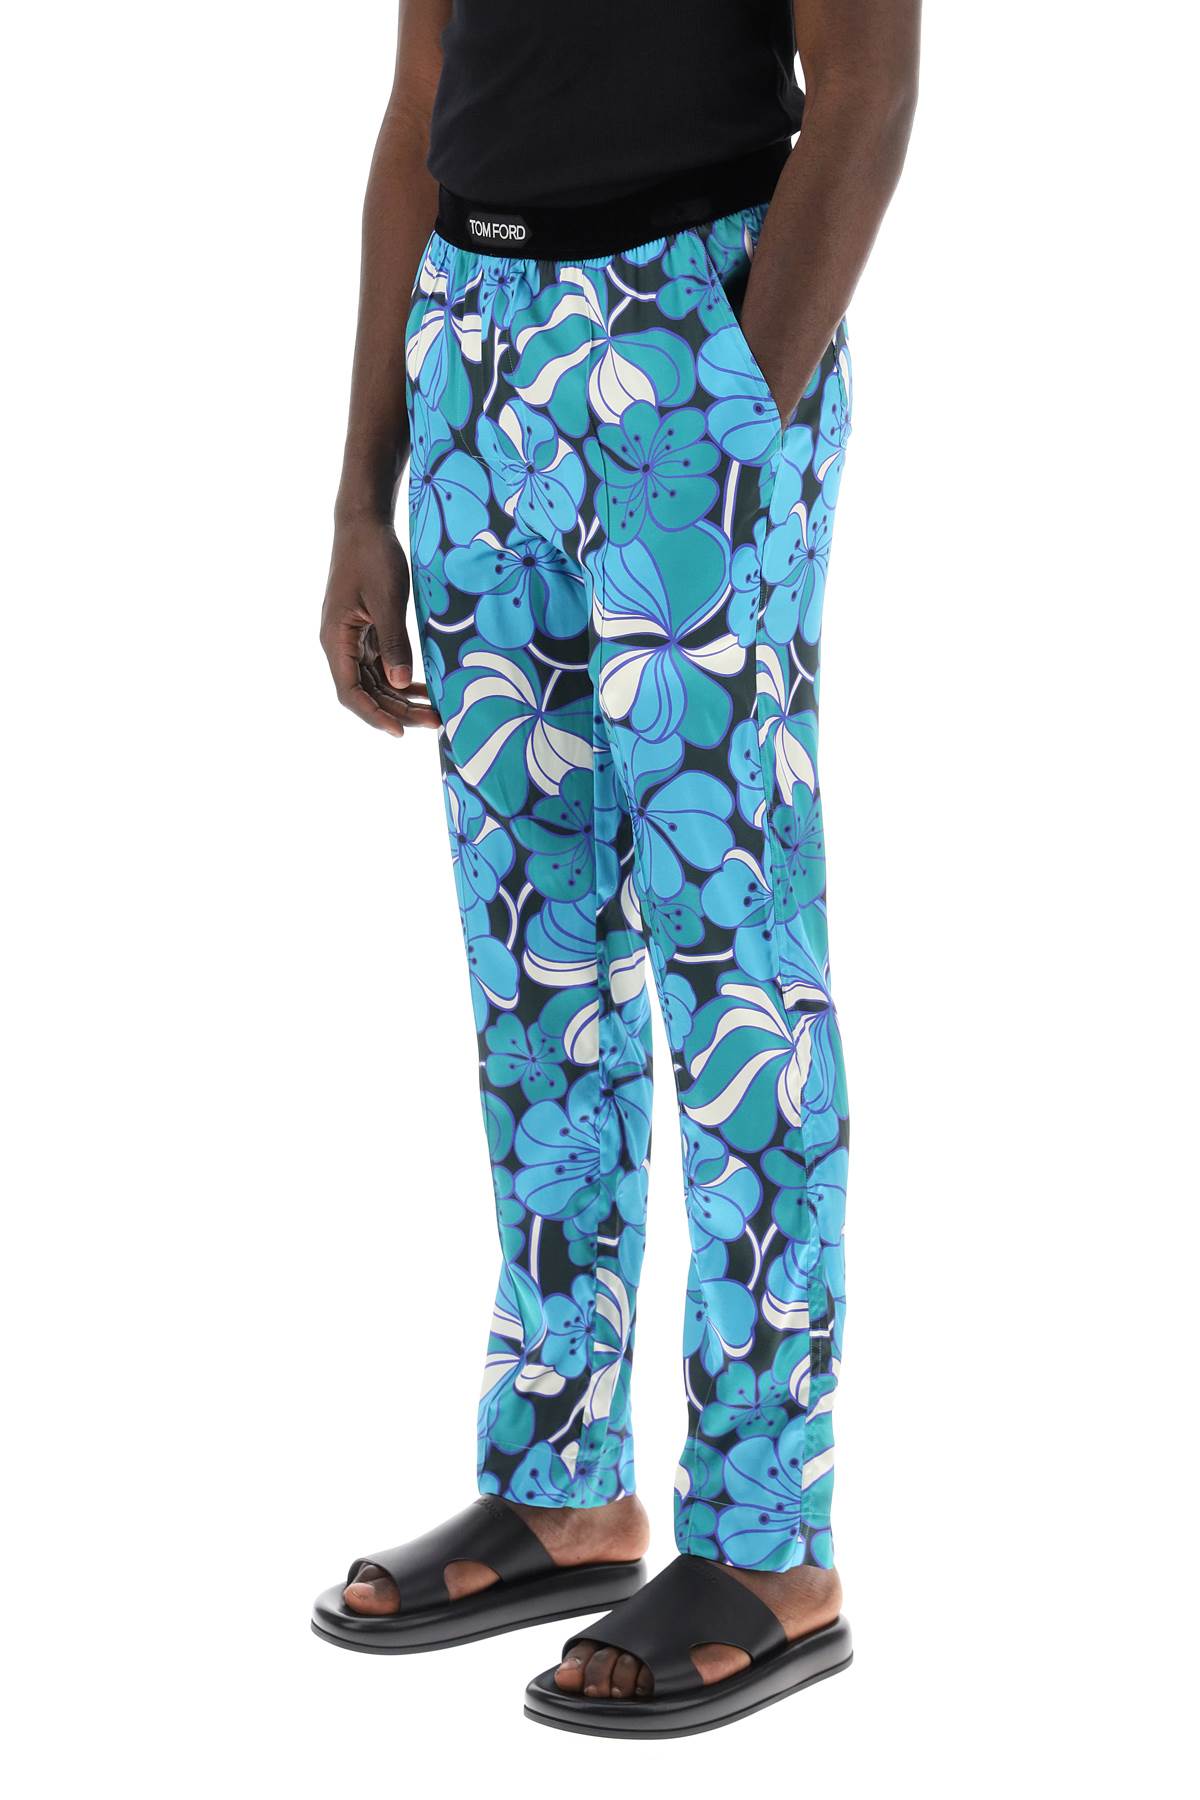 Tom ford pajama pants in floral silk-3